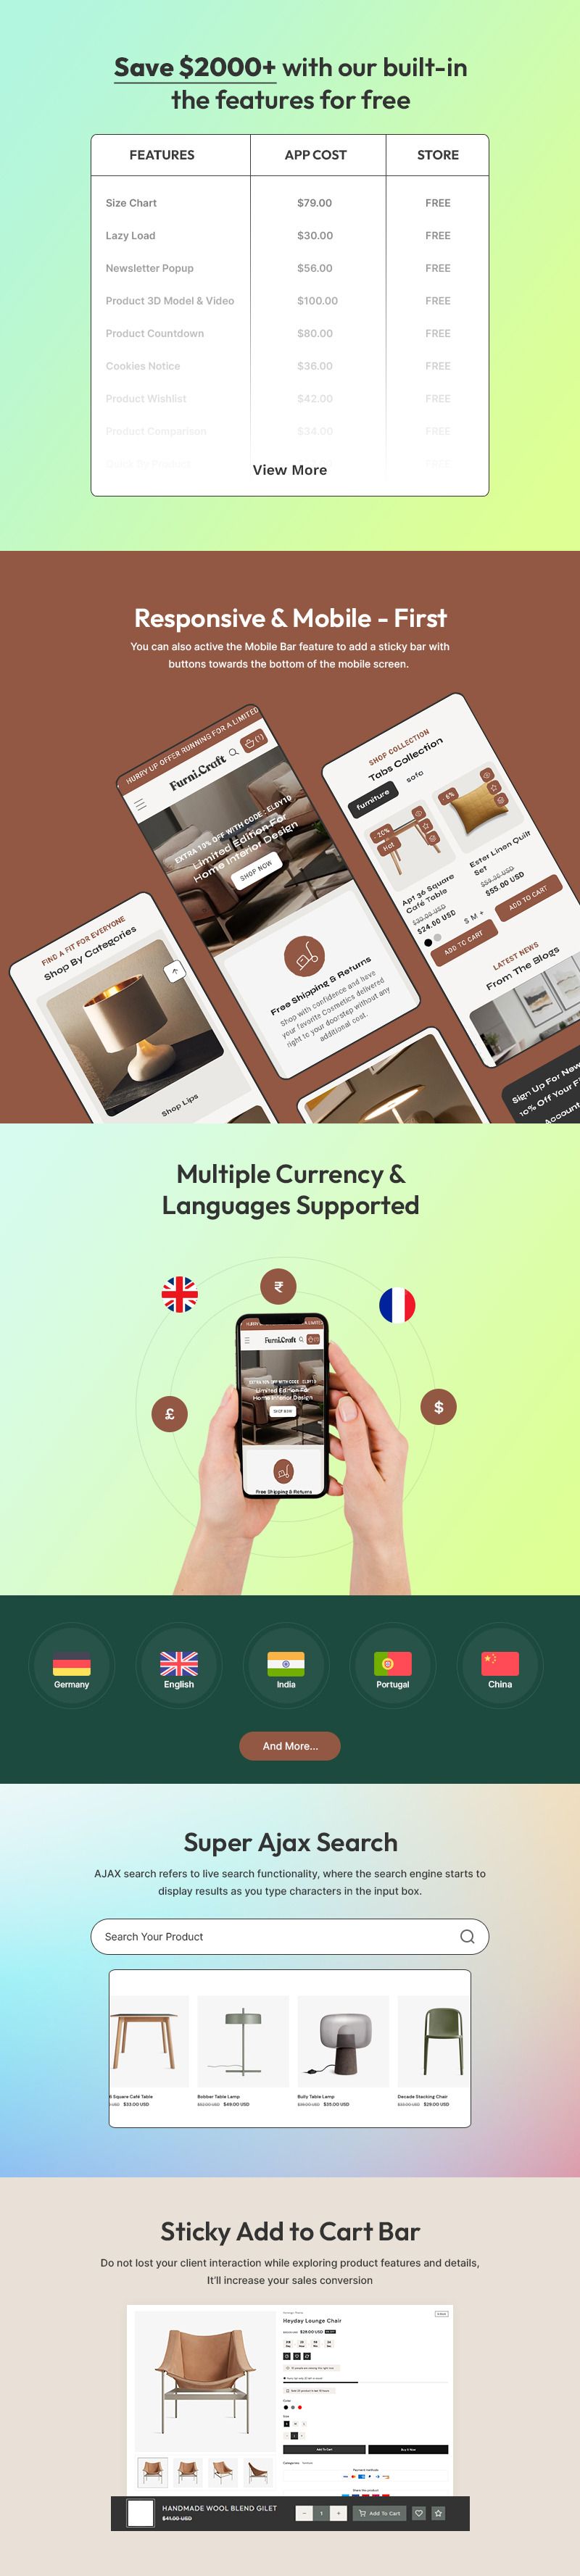 Futnicraft - Furniture & Home Interior Decor Multipurpose Shopify 2.0 Responsive Theme - Features Image 2